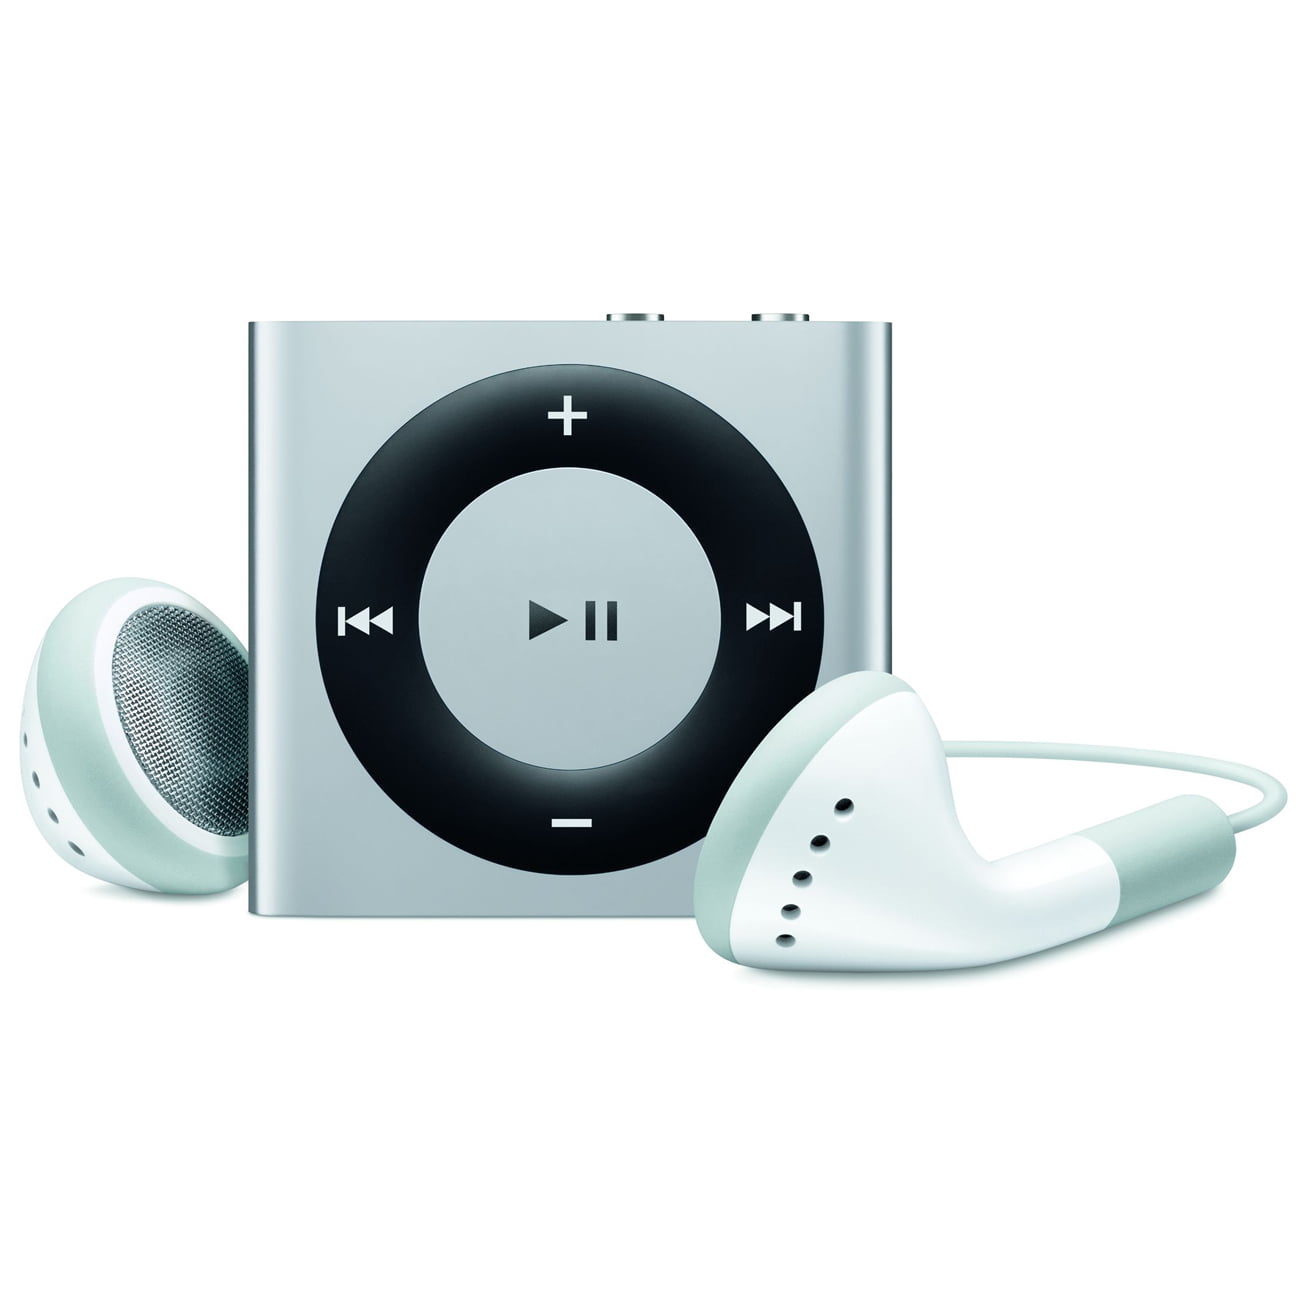 iPod shuffle 2GB Flash MP3 Player - Walmart.com - Walmart.com